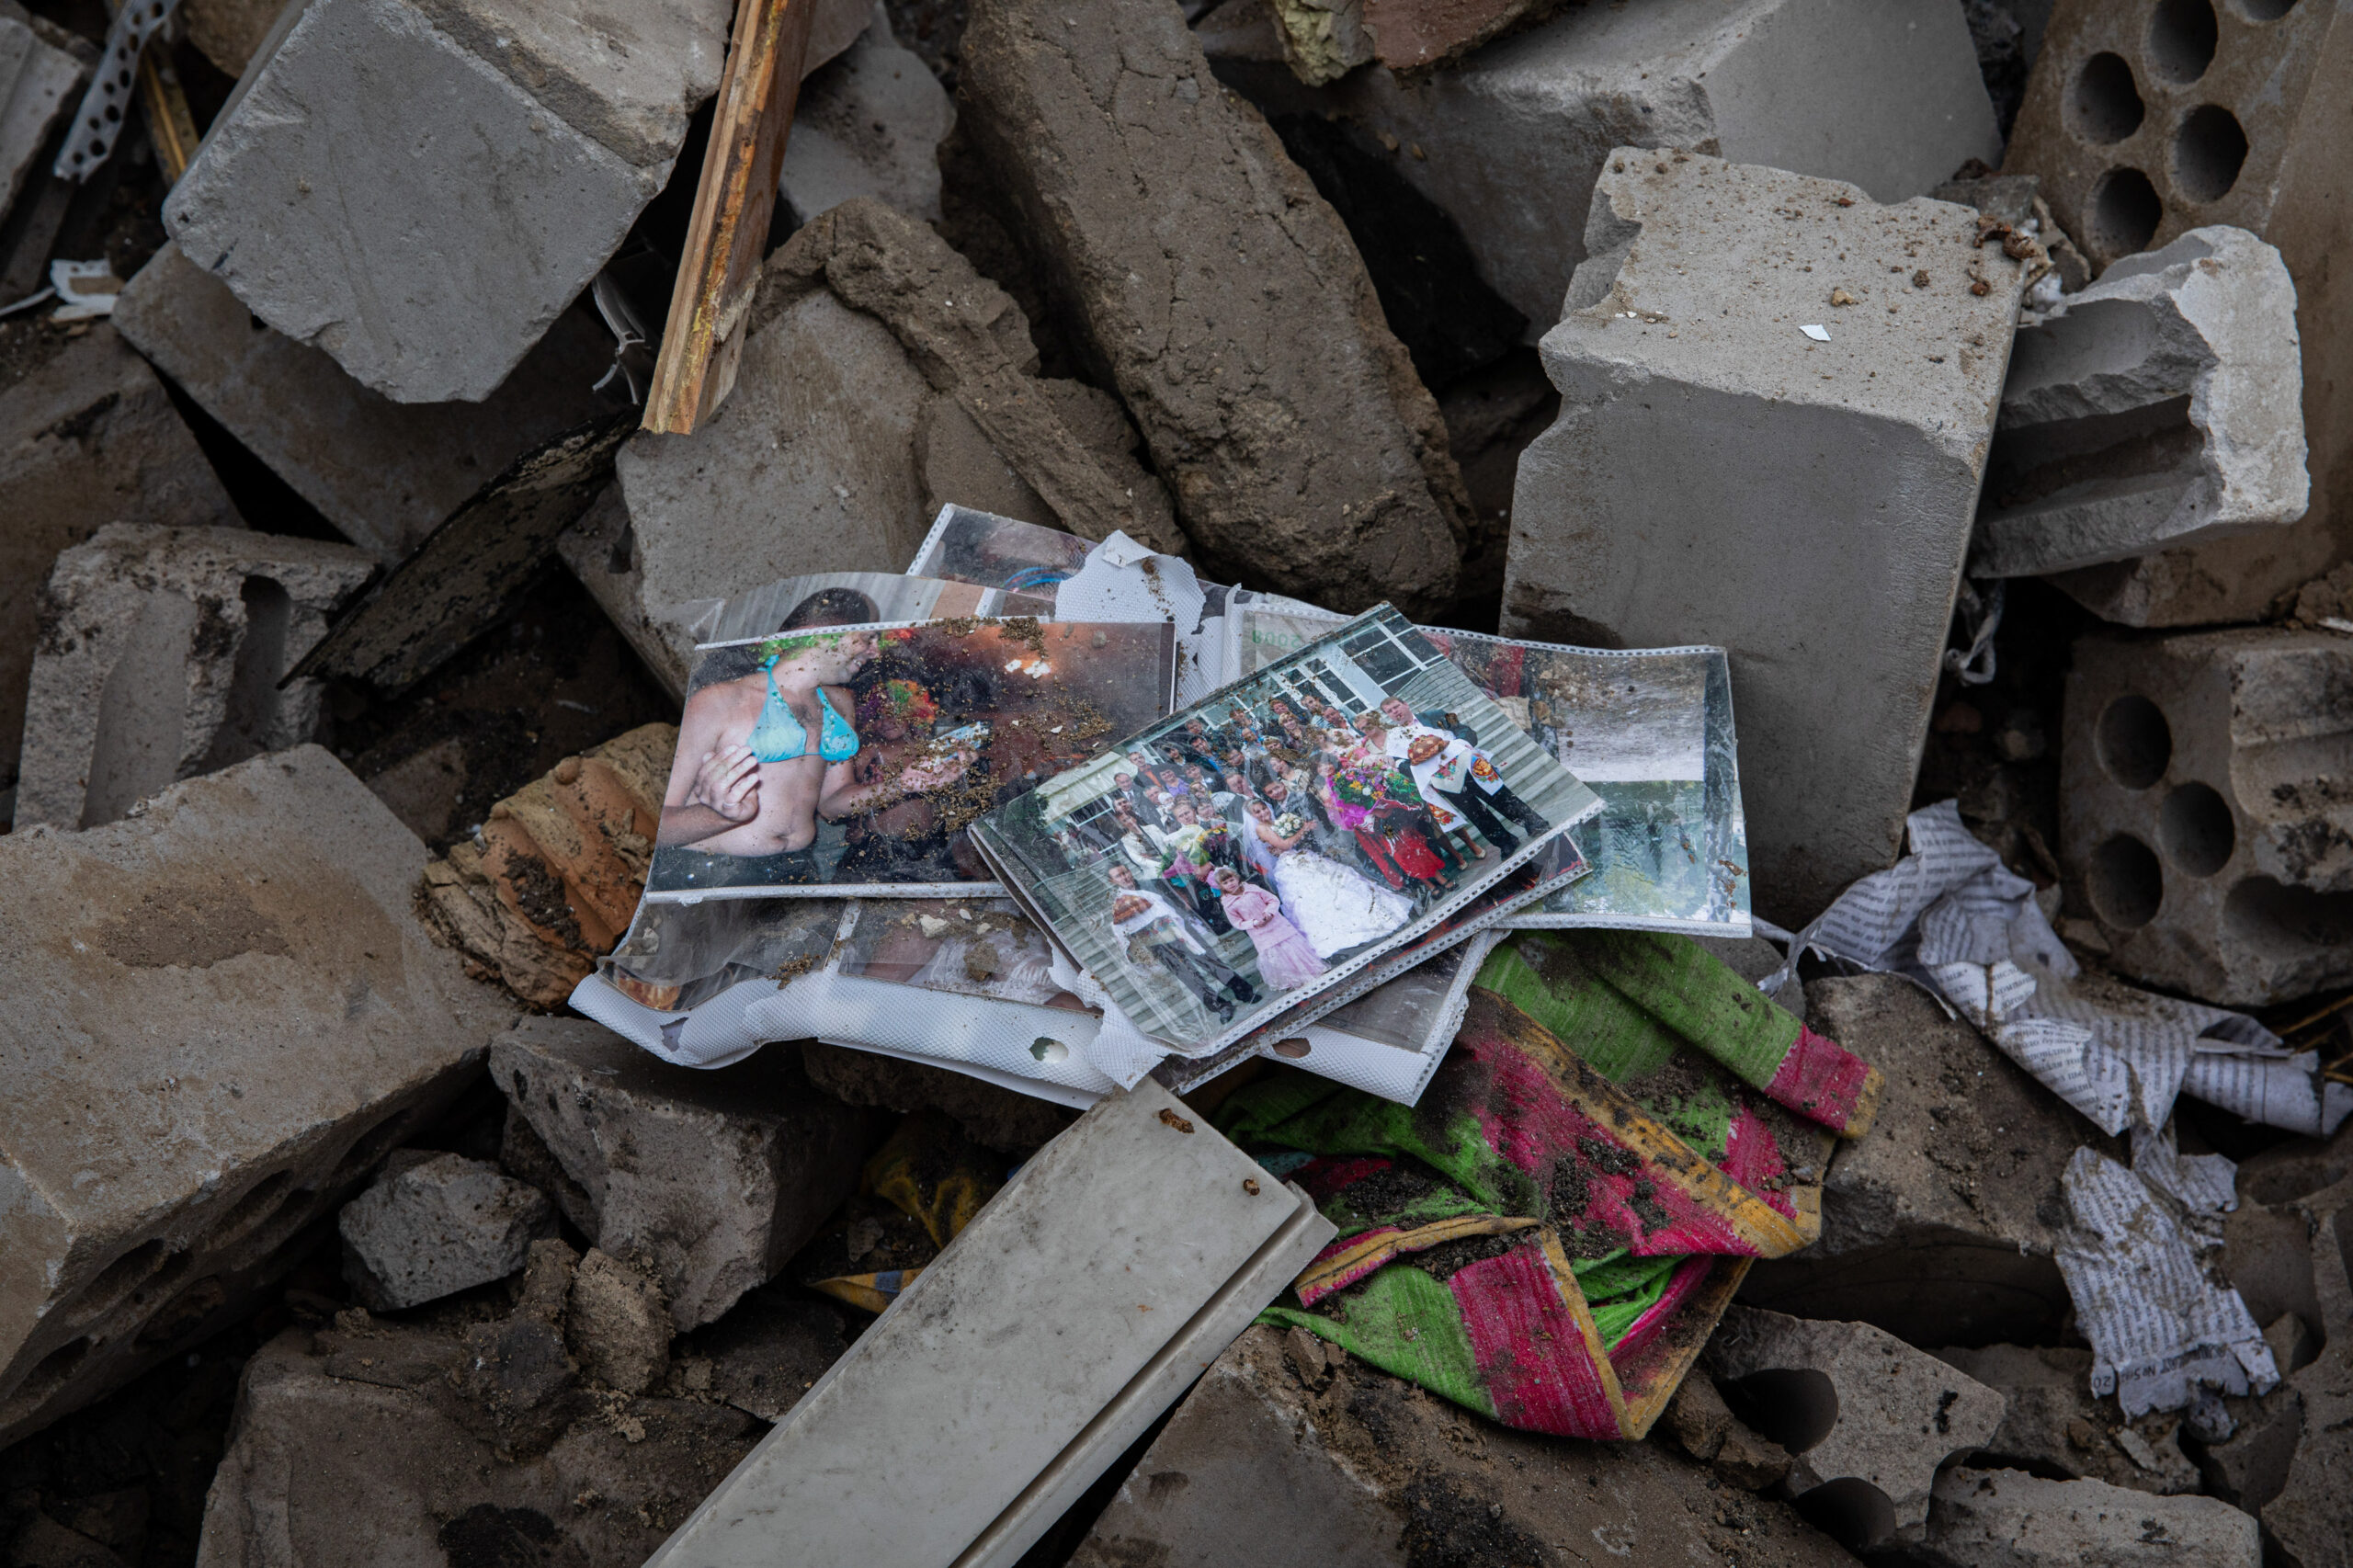  Семейные фотографии на развалинах дома. Бородянка. 6 апреля 2022 года. Фото Alex Chan/SOPA Images via ZUMA Press Wire/Scanpix/LETA